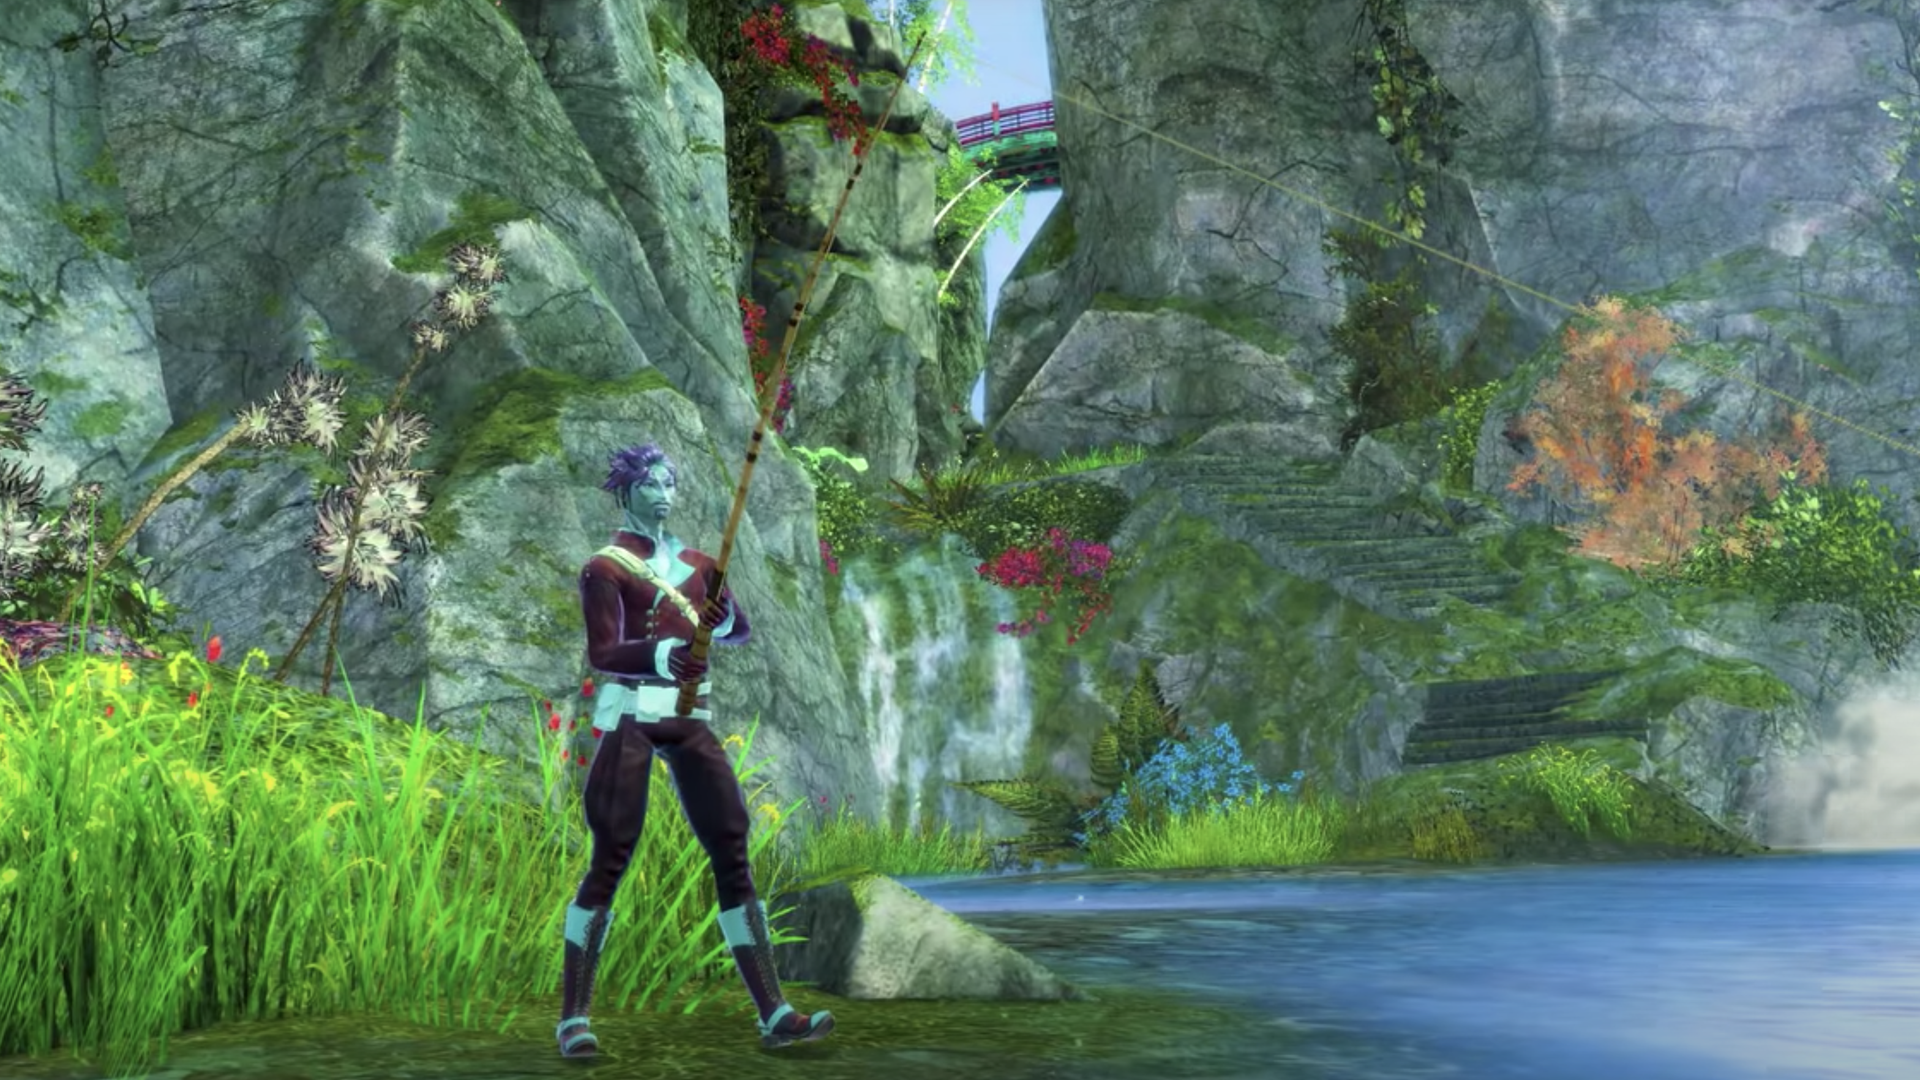 Screenshot of a video game character fishing